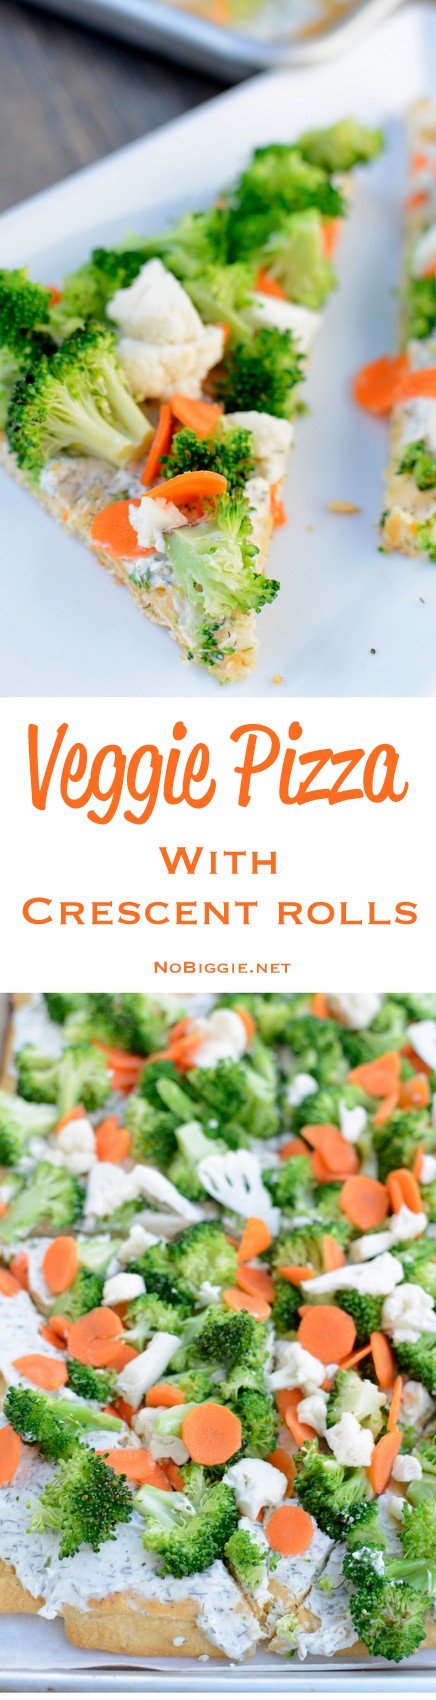 http://www.nobiggie.net/wp-content/uploads/2016/04/Veggie-Pizza-Appetizer-with-crescent-rolls.jpg